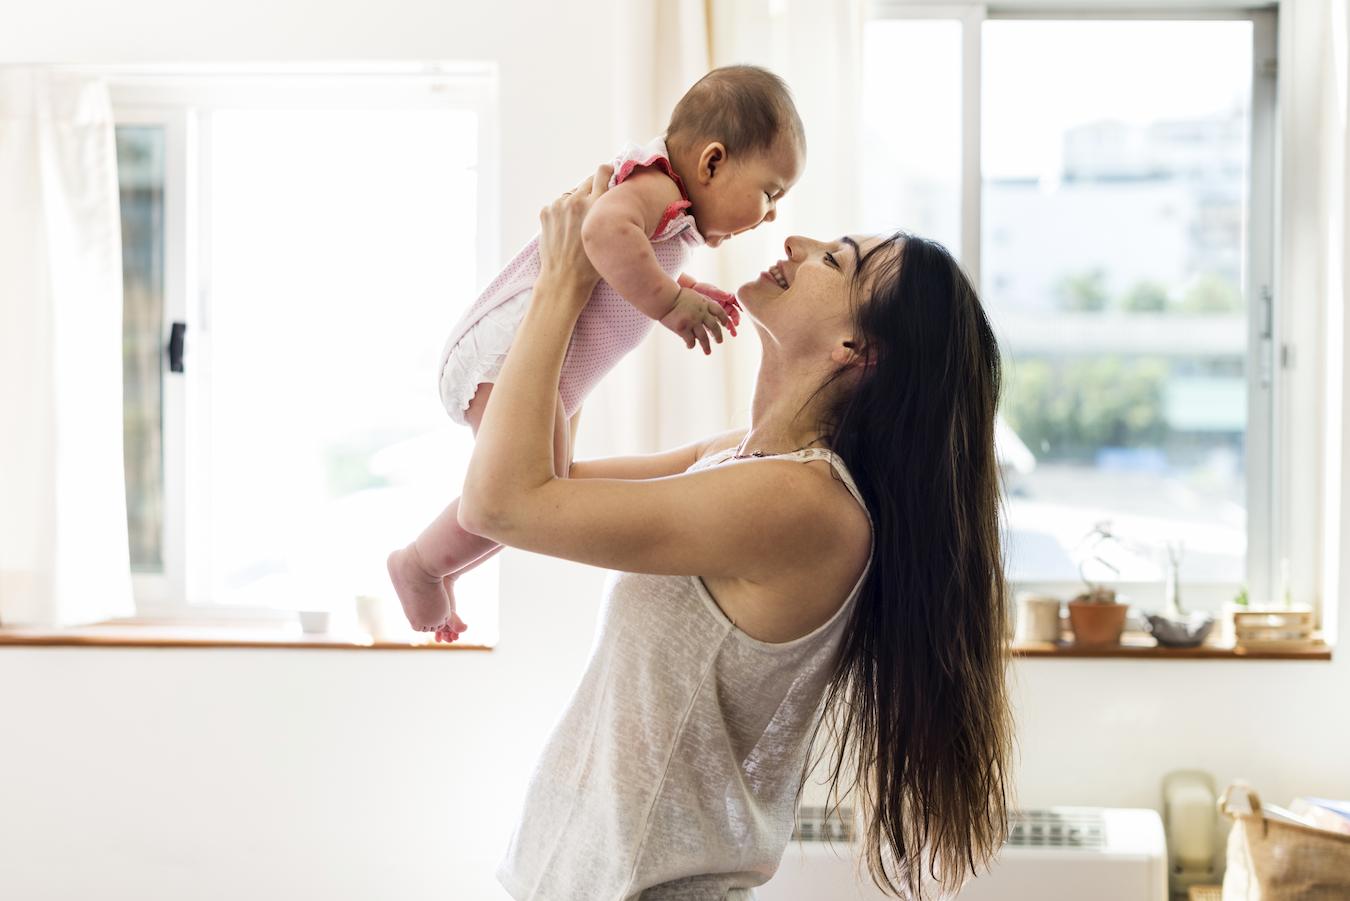 Women's health how long can breast milk